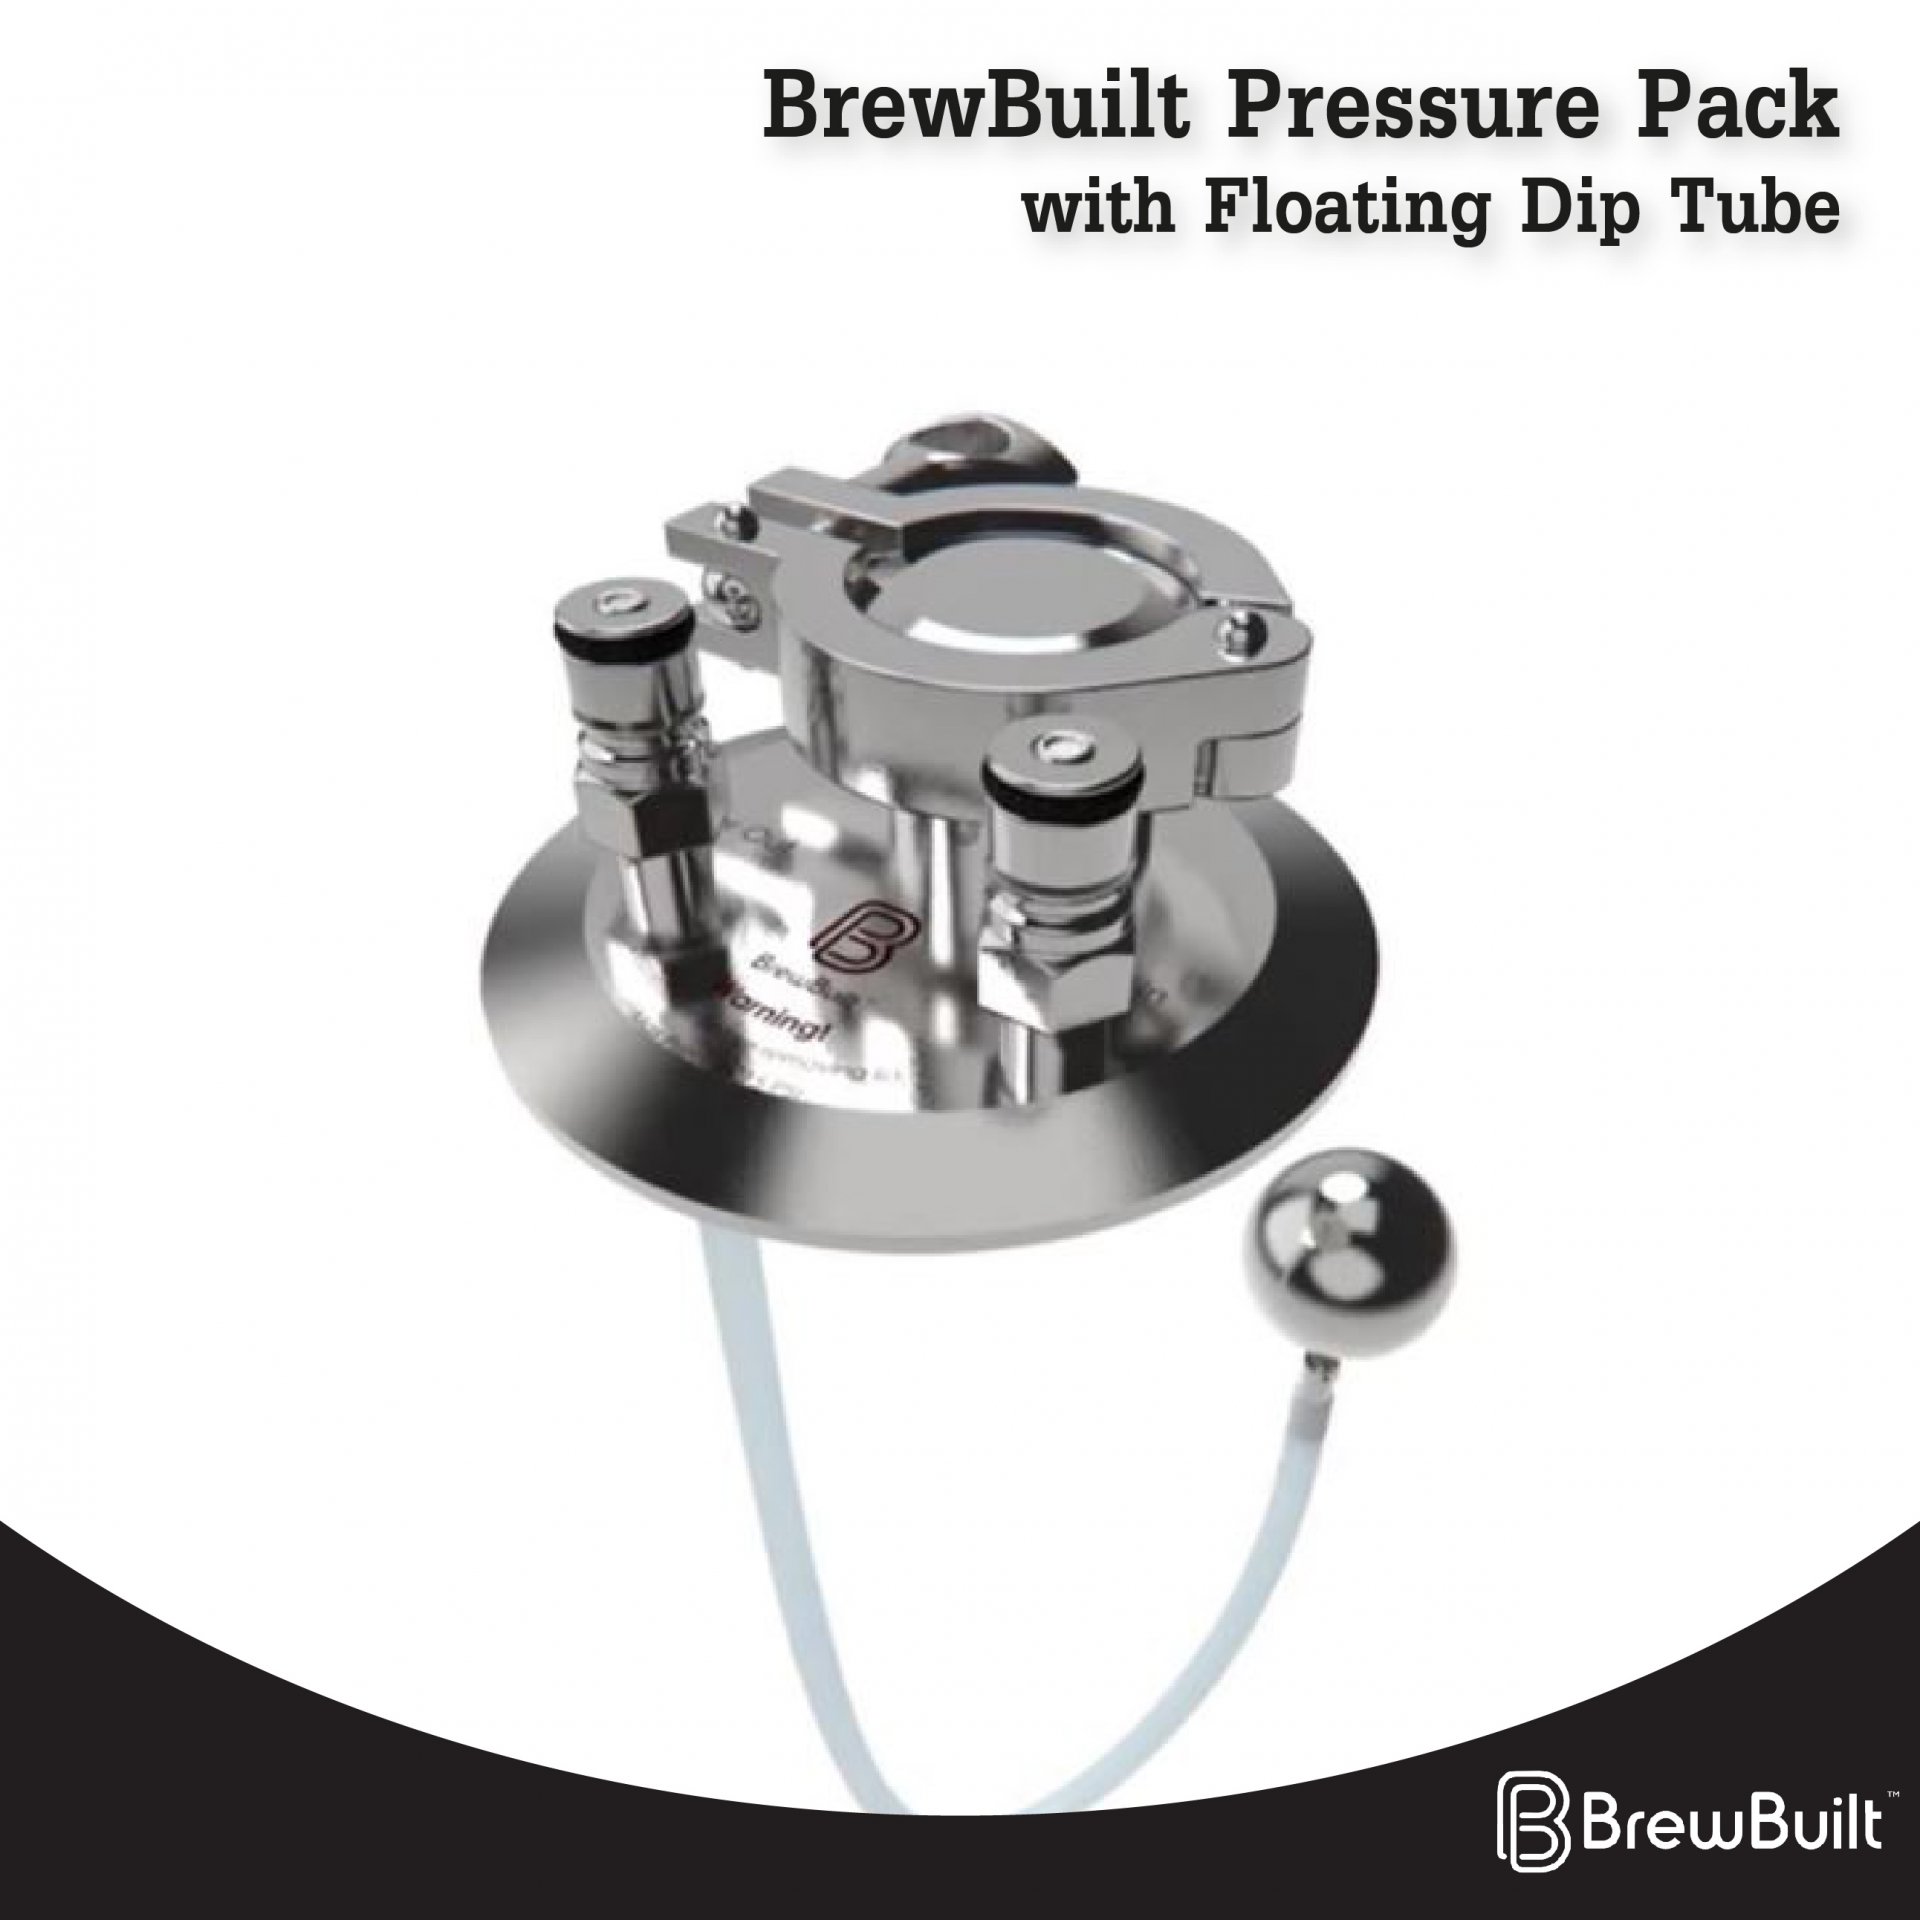 BrewBuilt Pressure Pack with Floating Dip Tube